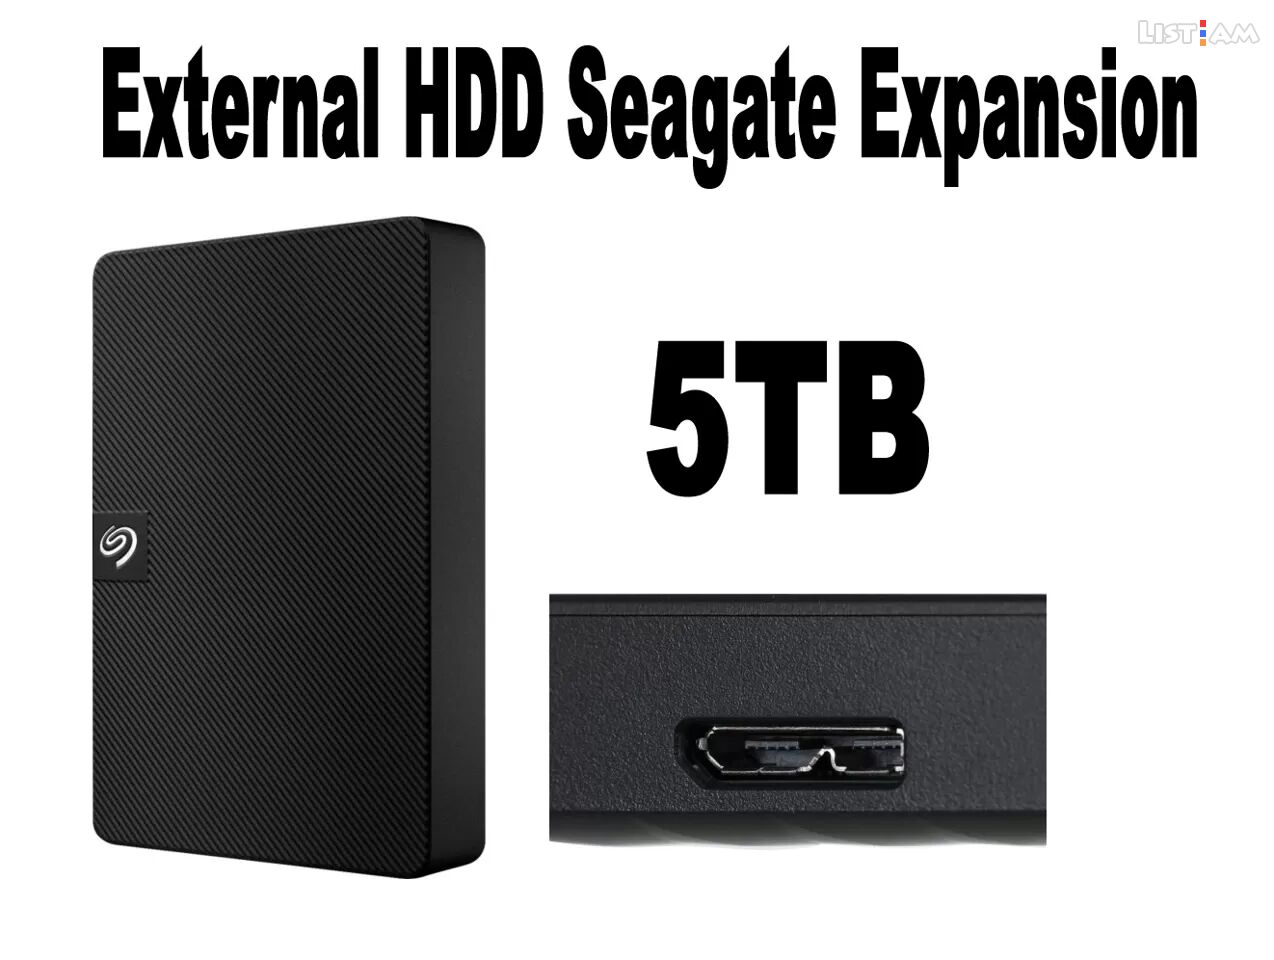 External HDD Seagate